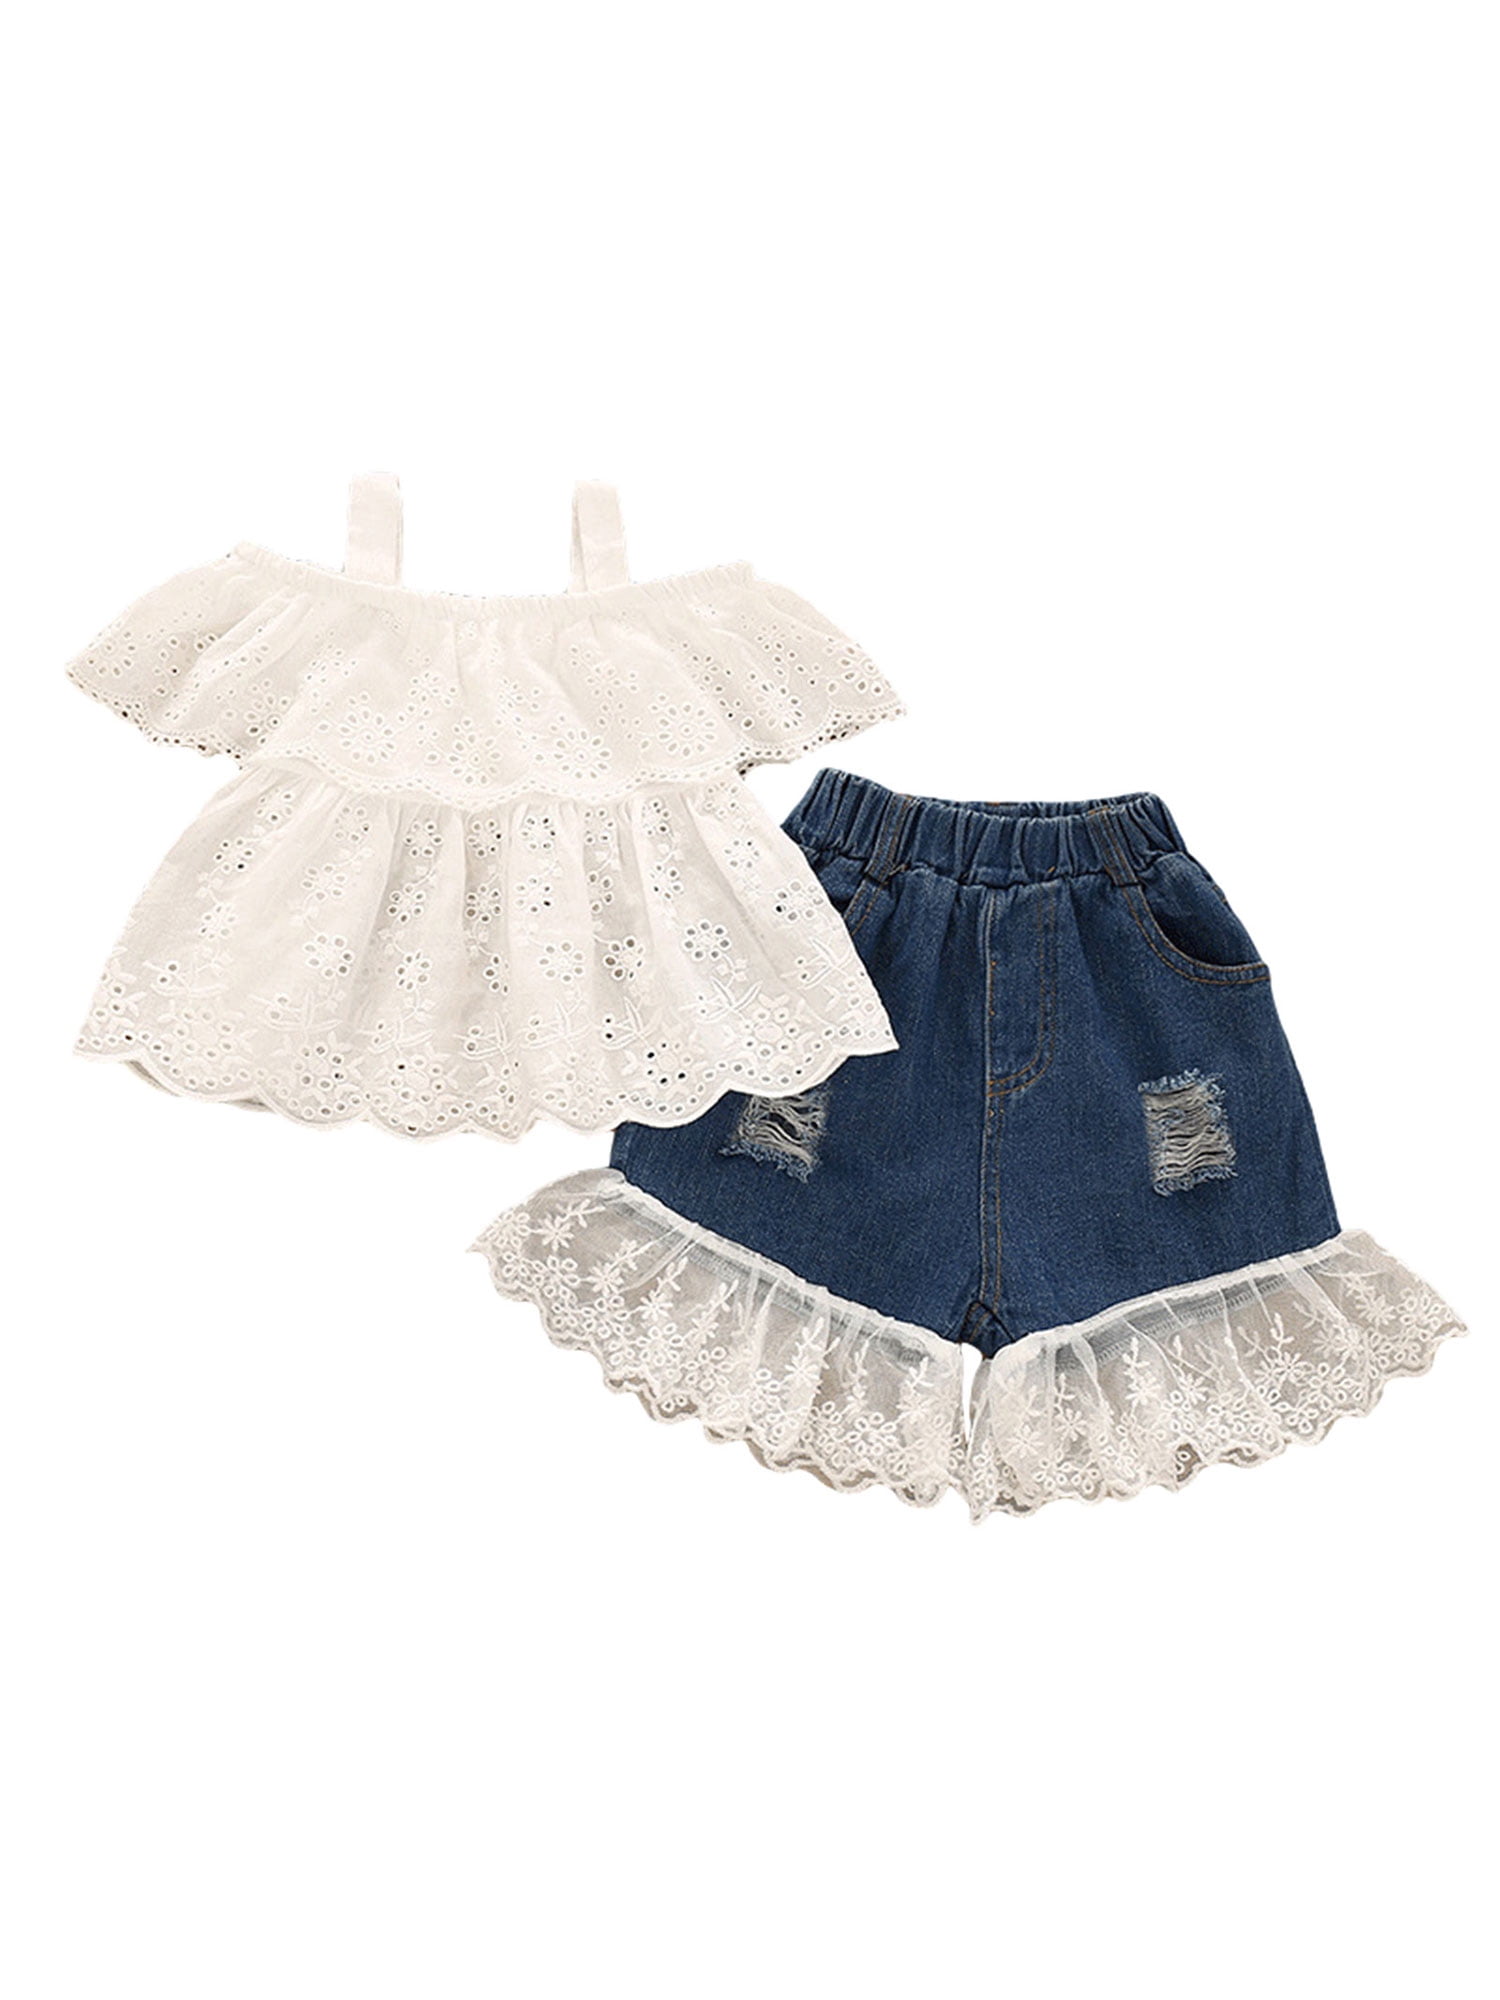 Denim Shorts Skirt Clothes Set Infant Newborn Baby Girl 2Pcs Outfits Lace Off Shoulder Tops